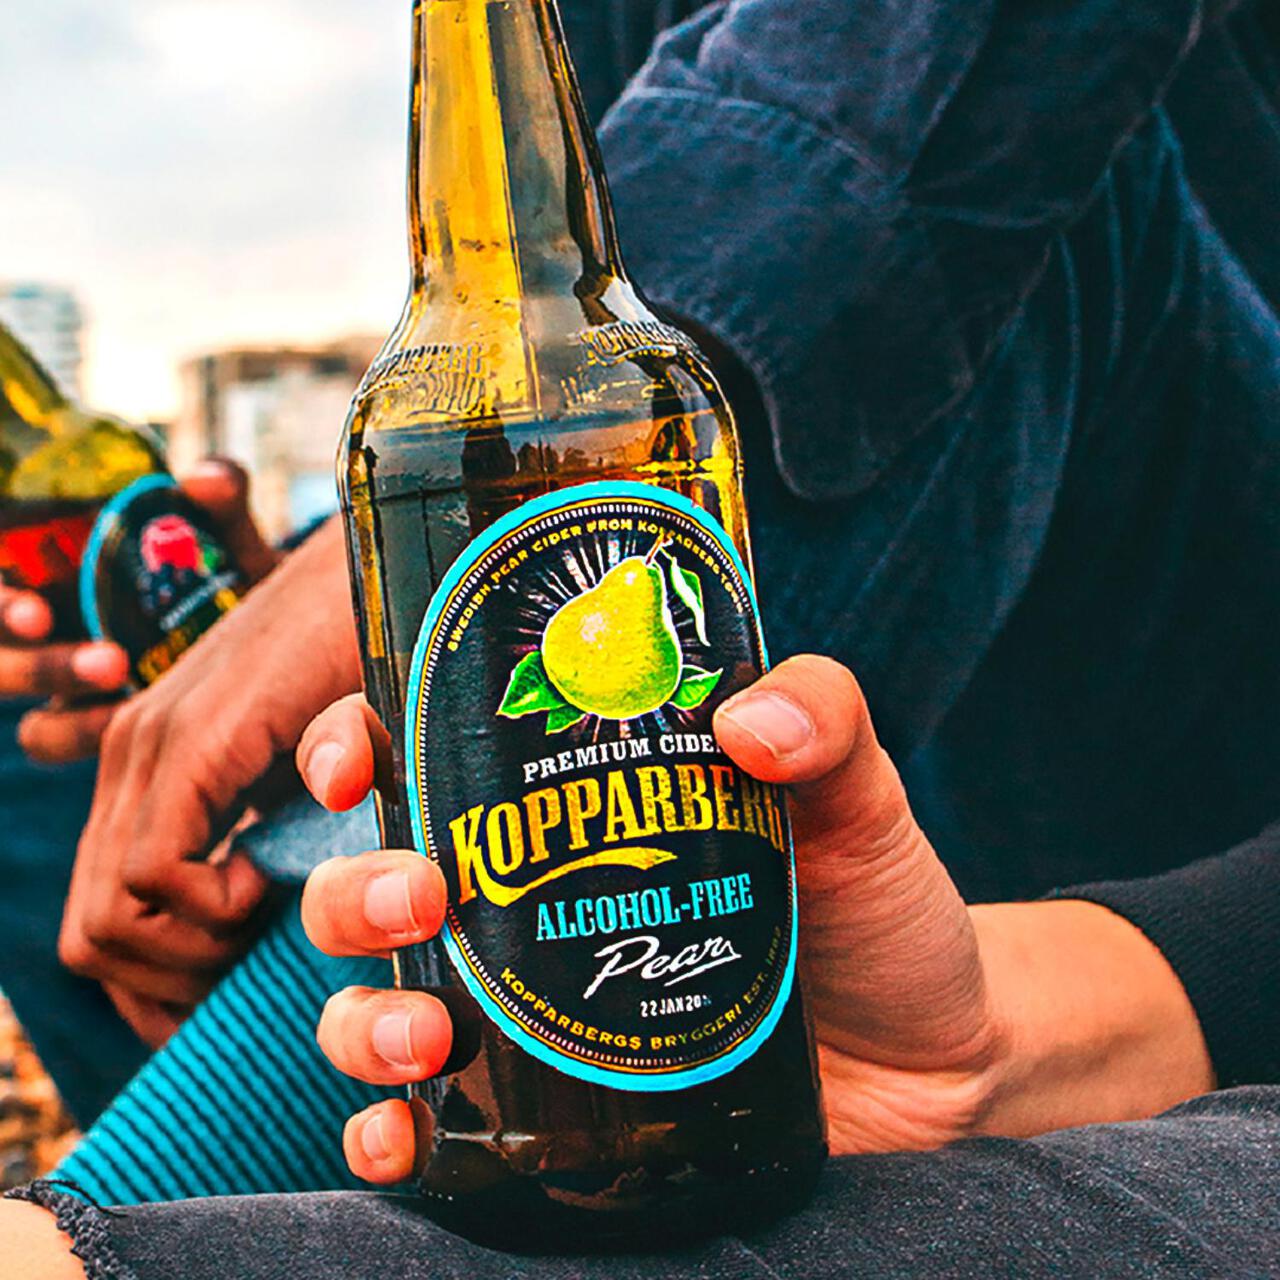 Kopparberg Alcohol Free Pear Cider 500ml